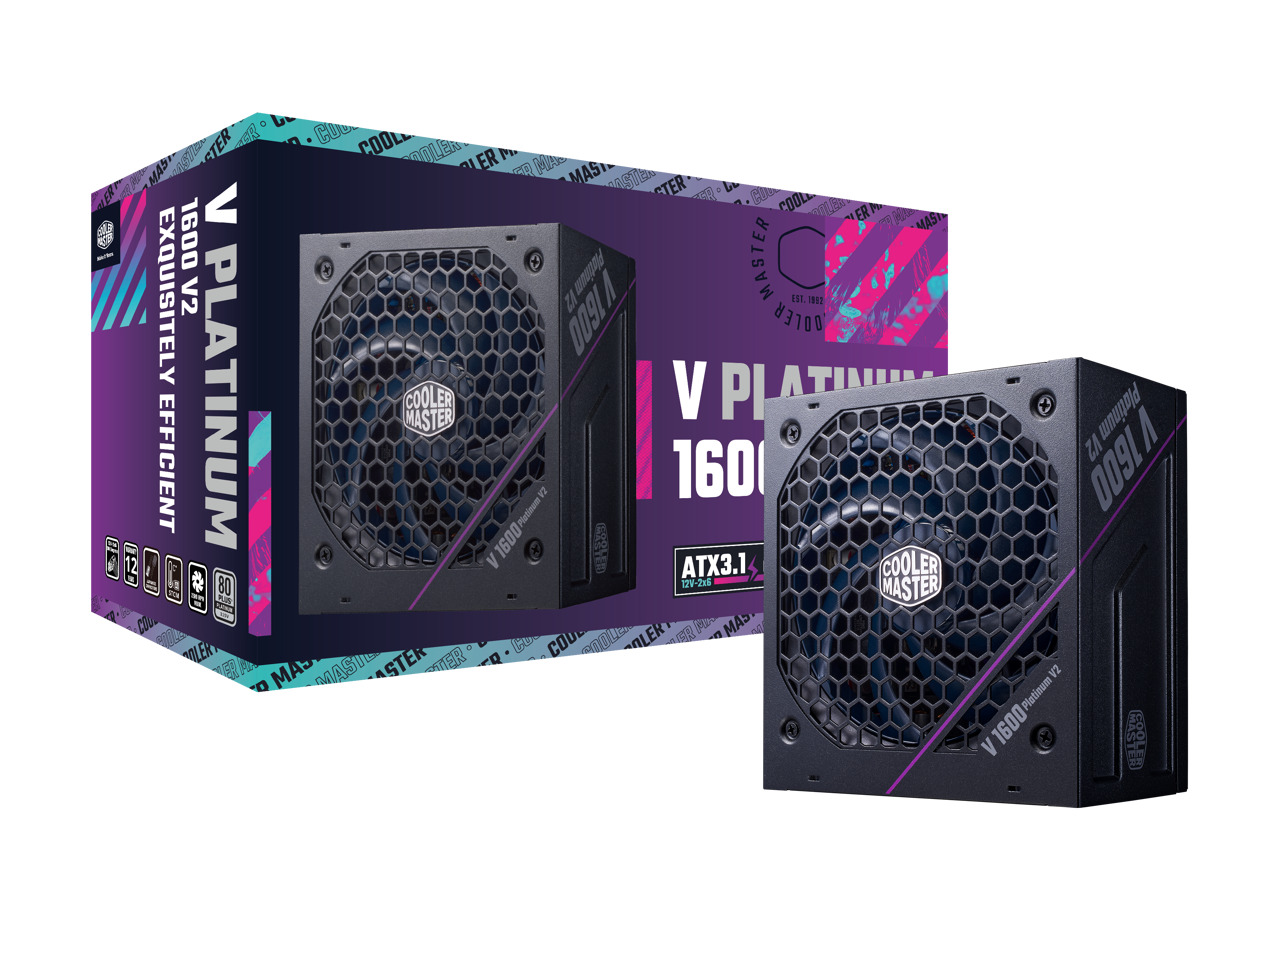 Cooler Master V Platinum 1600W V2 ATX 3.1 Full Modular PSU, 80+ Platinum, Dual 9